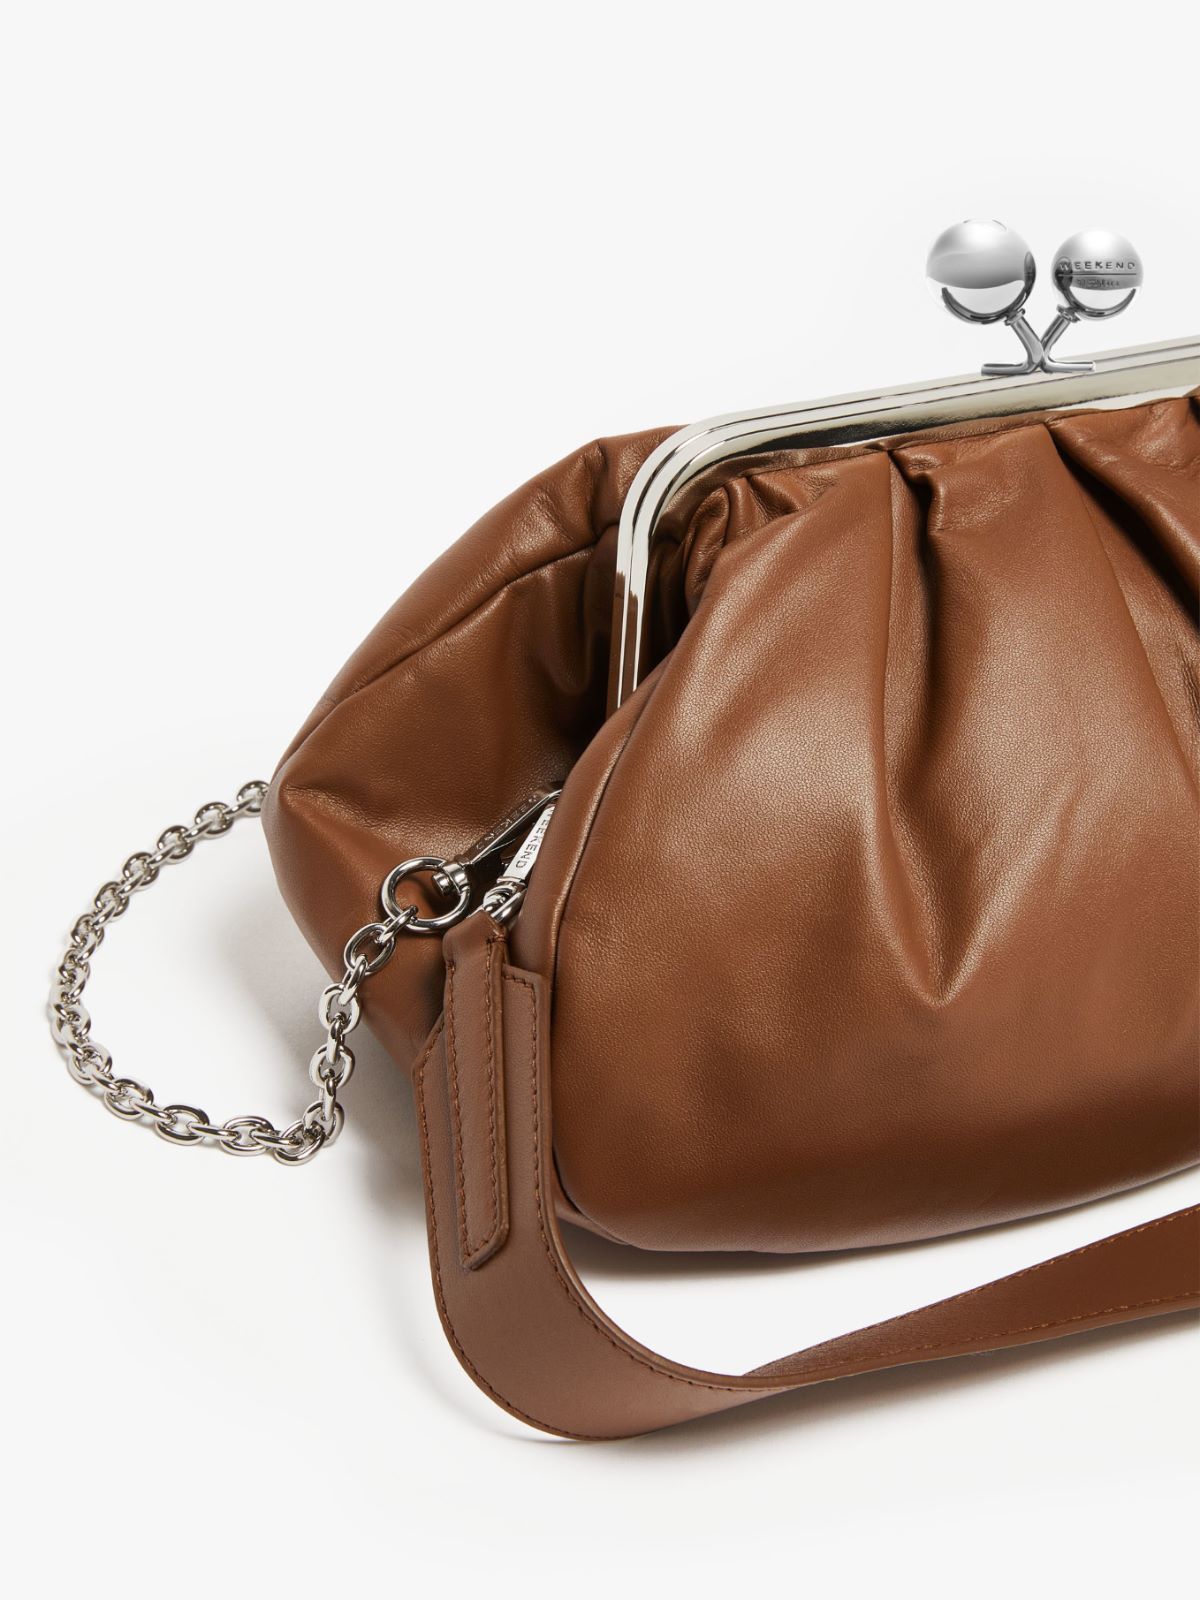 Medium Pasticcino Bag in nappa leather - TOBACCO - Weekend Max Mara - 4